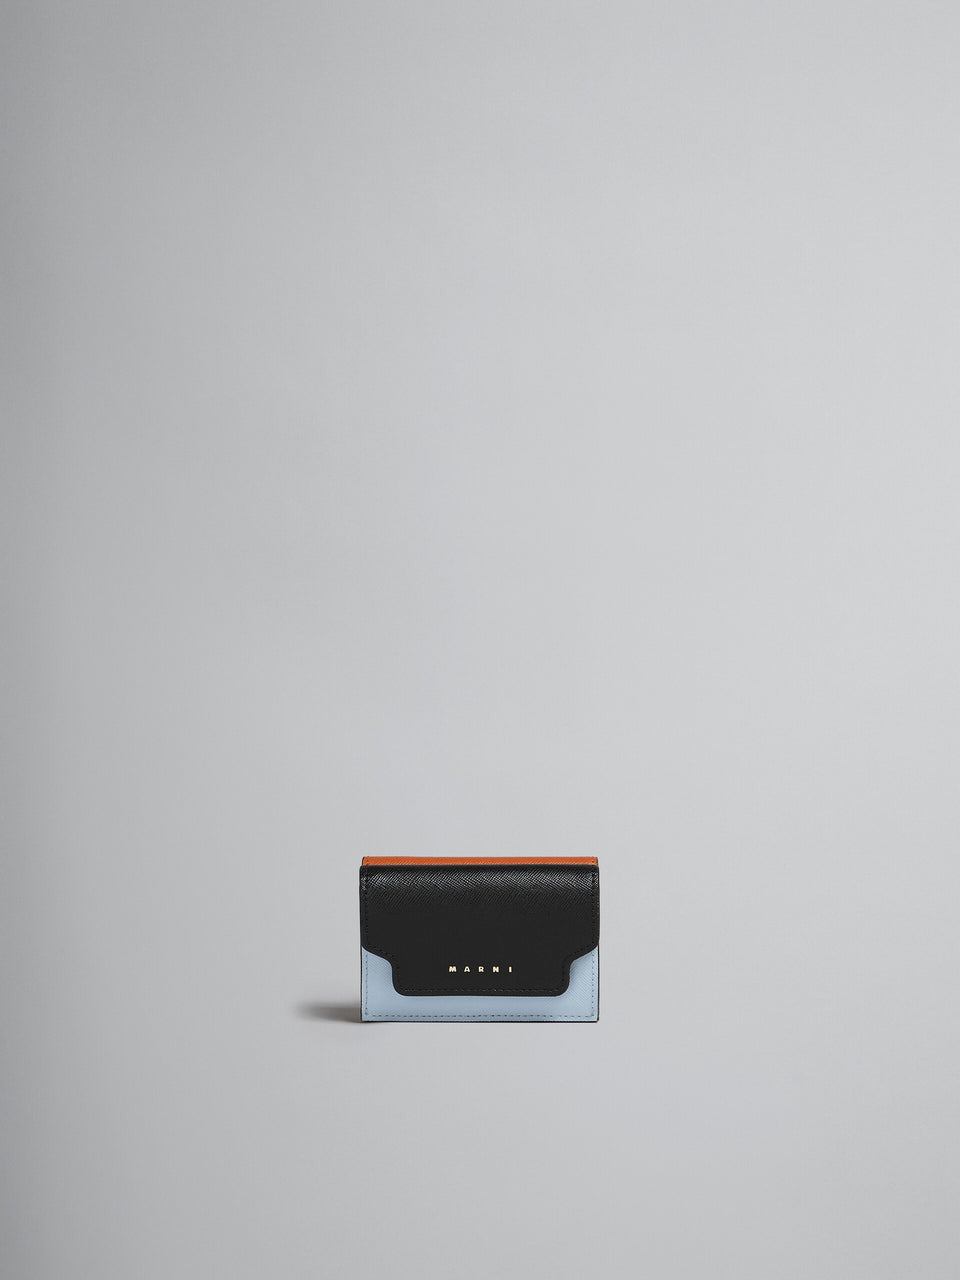 Marni Leather Trifold Wallet - Blue/Black/orange